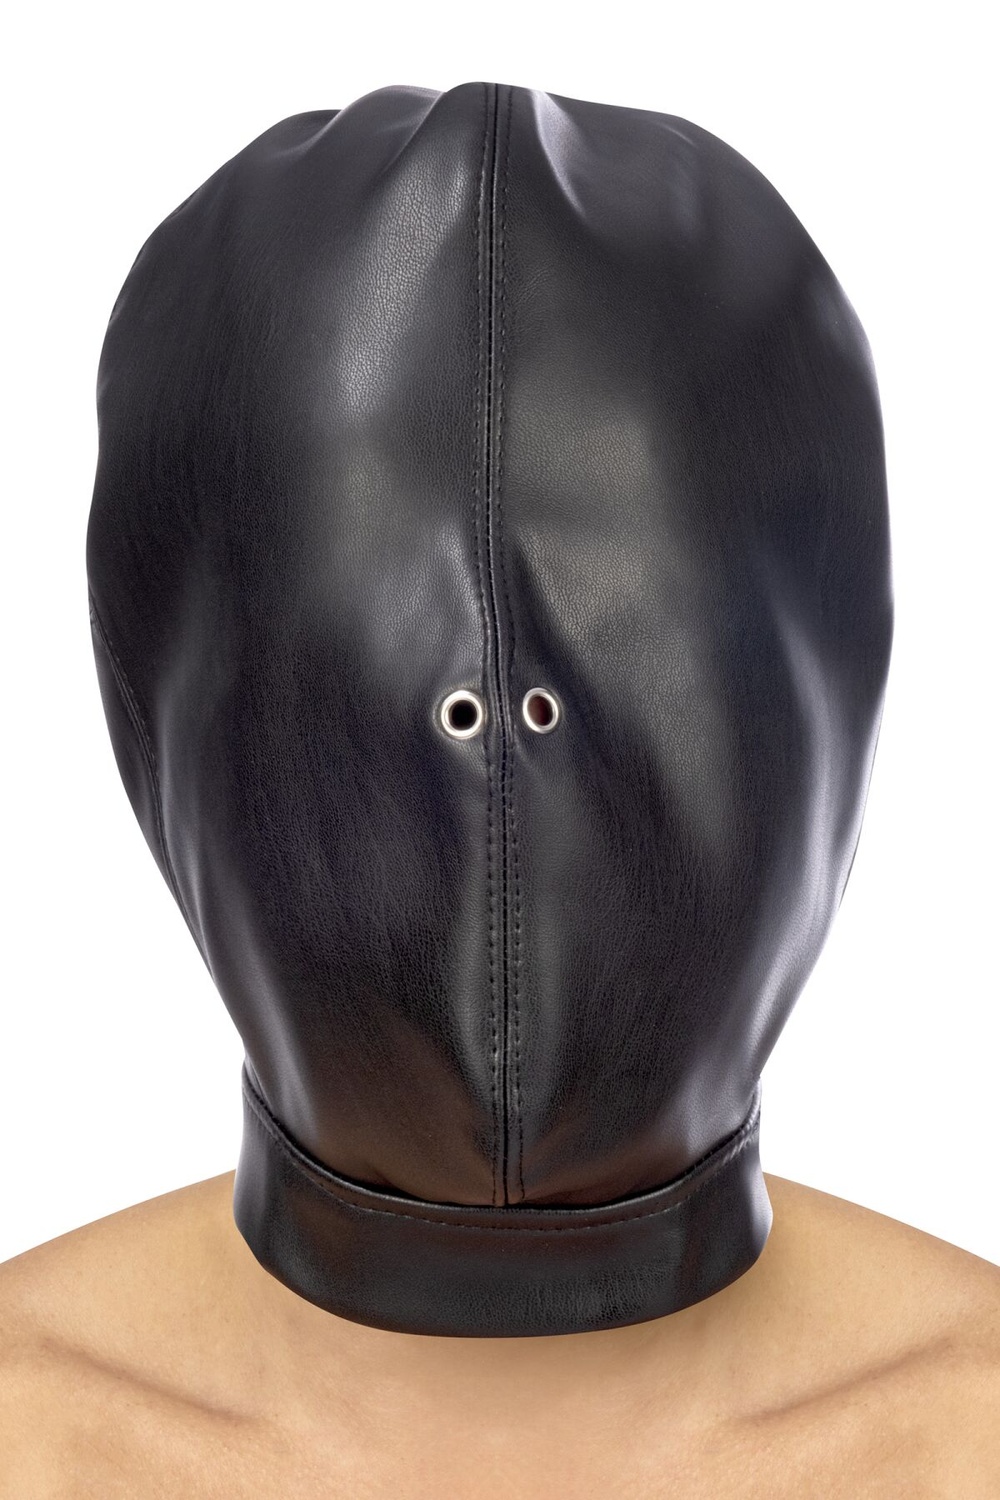 Капюшон для БДСМ Fetish Tentation Closed BDSM hood in leatherette фото